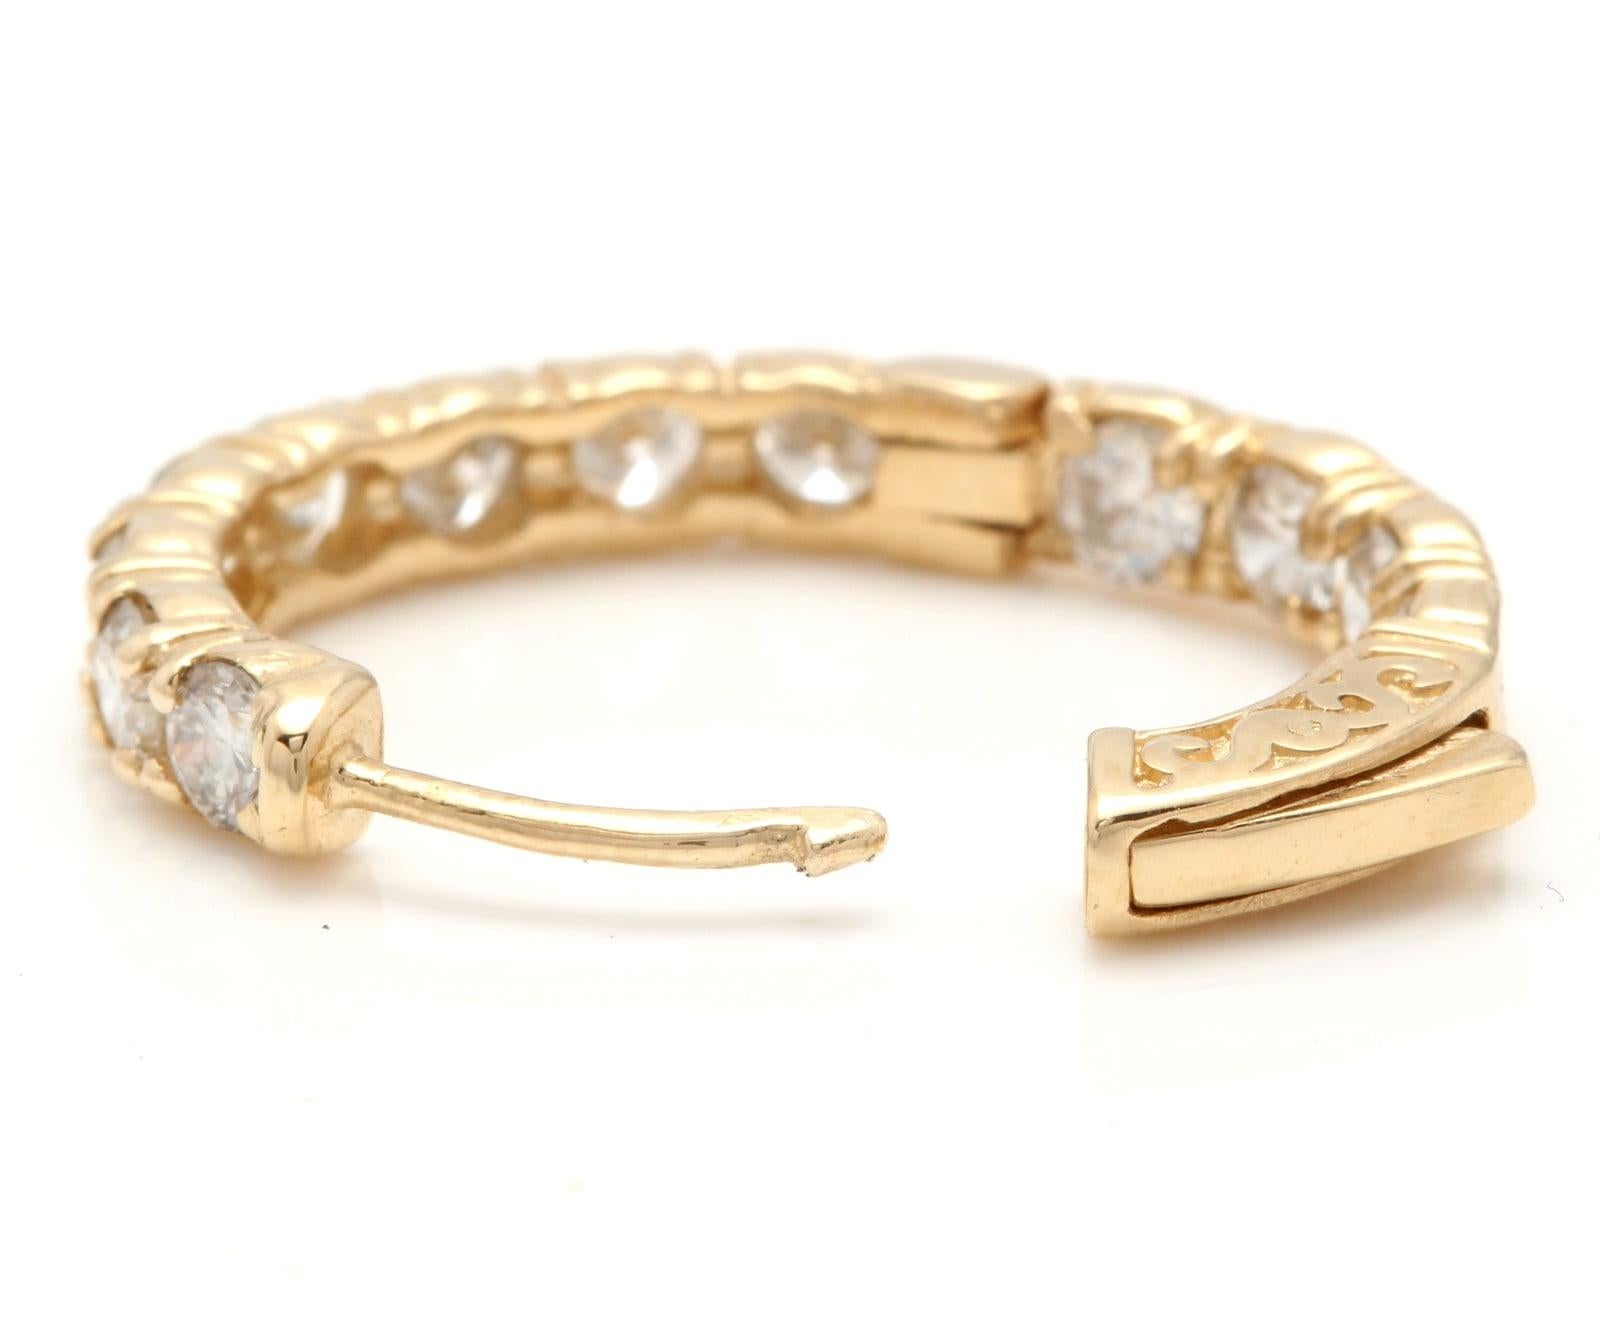 Exquisite 3.50 Carat Natural Diamond 14 Karat Solid Yellow Gold Hoop Earrings For Sale 1